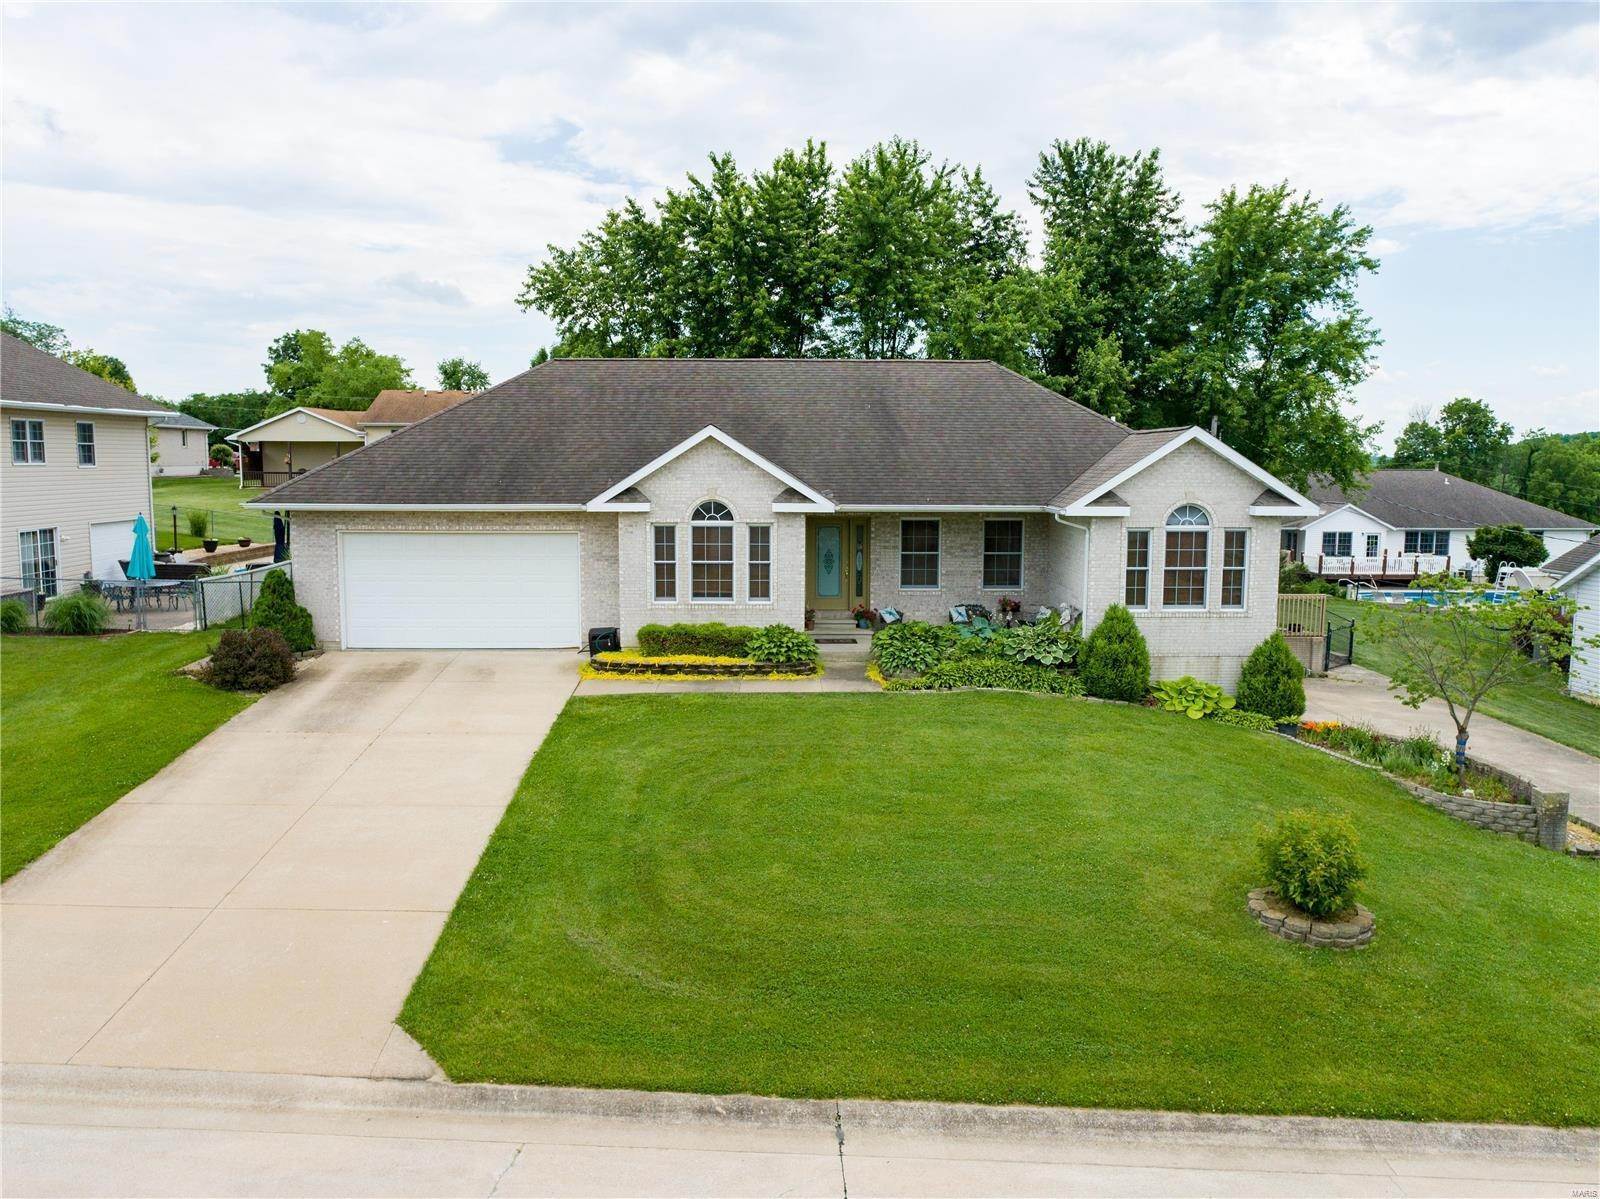 Property for Sale at 22 Amaryllis Lane Hannibal, Missouri 63401 United States